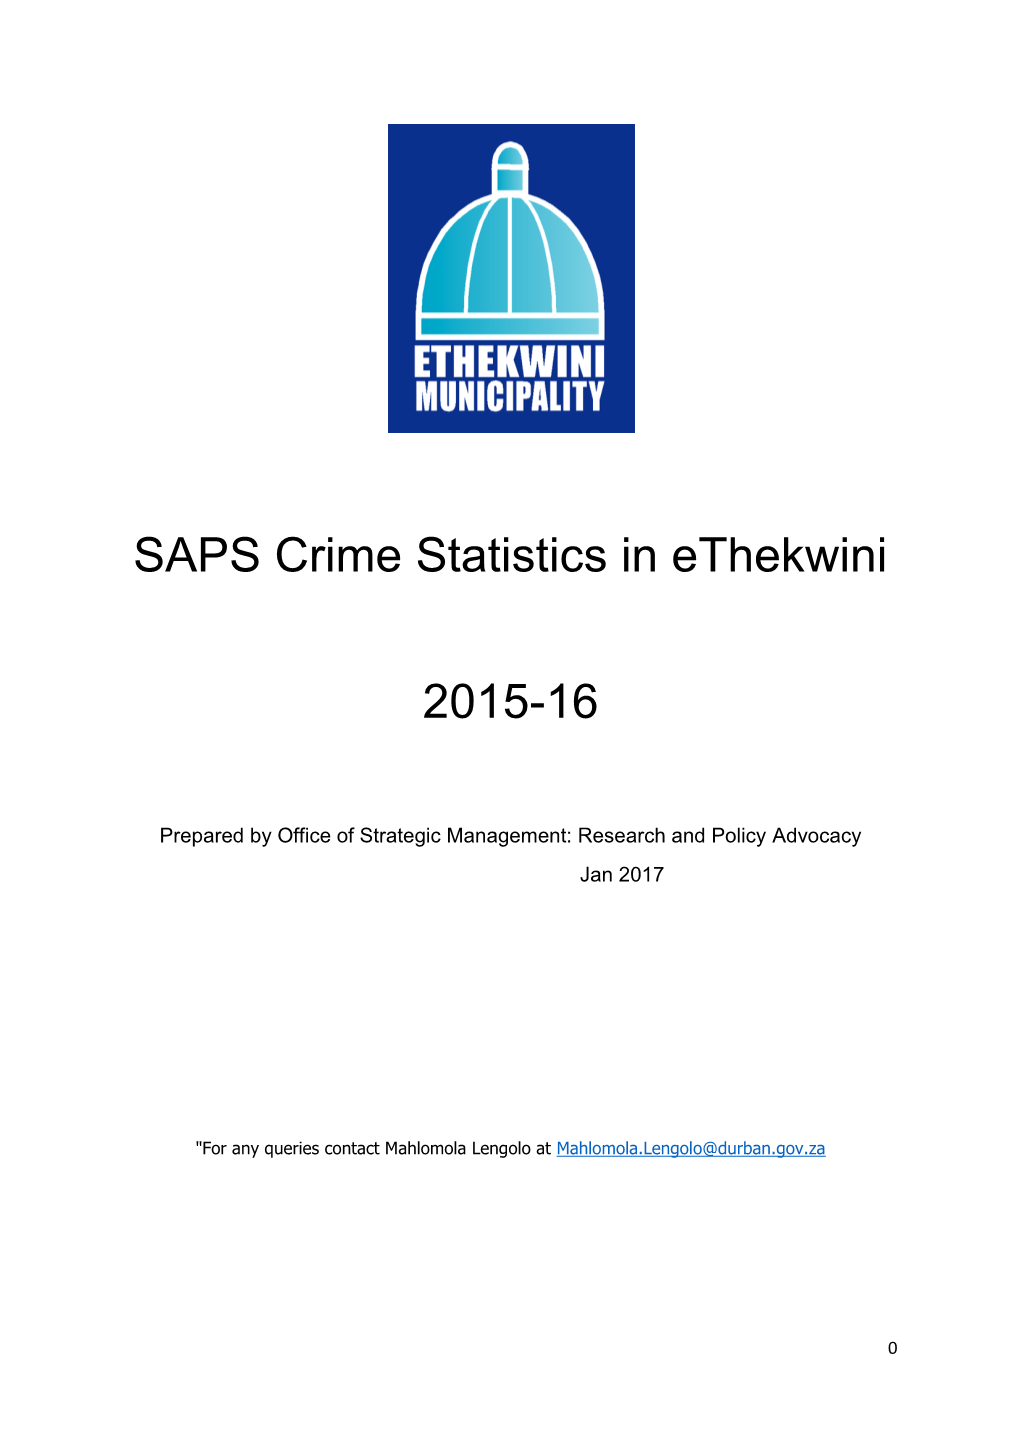 SAPS Crime Statistics in Ethekwini 2015-16